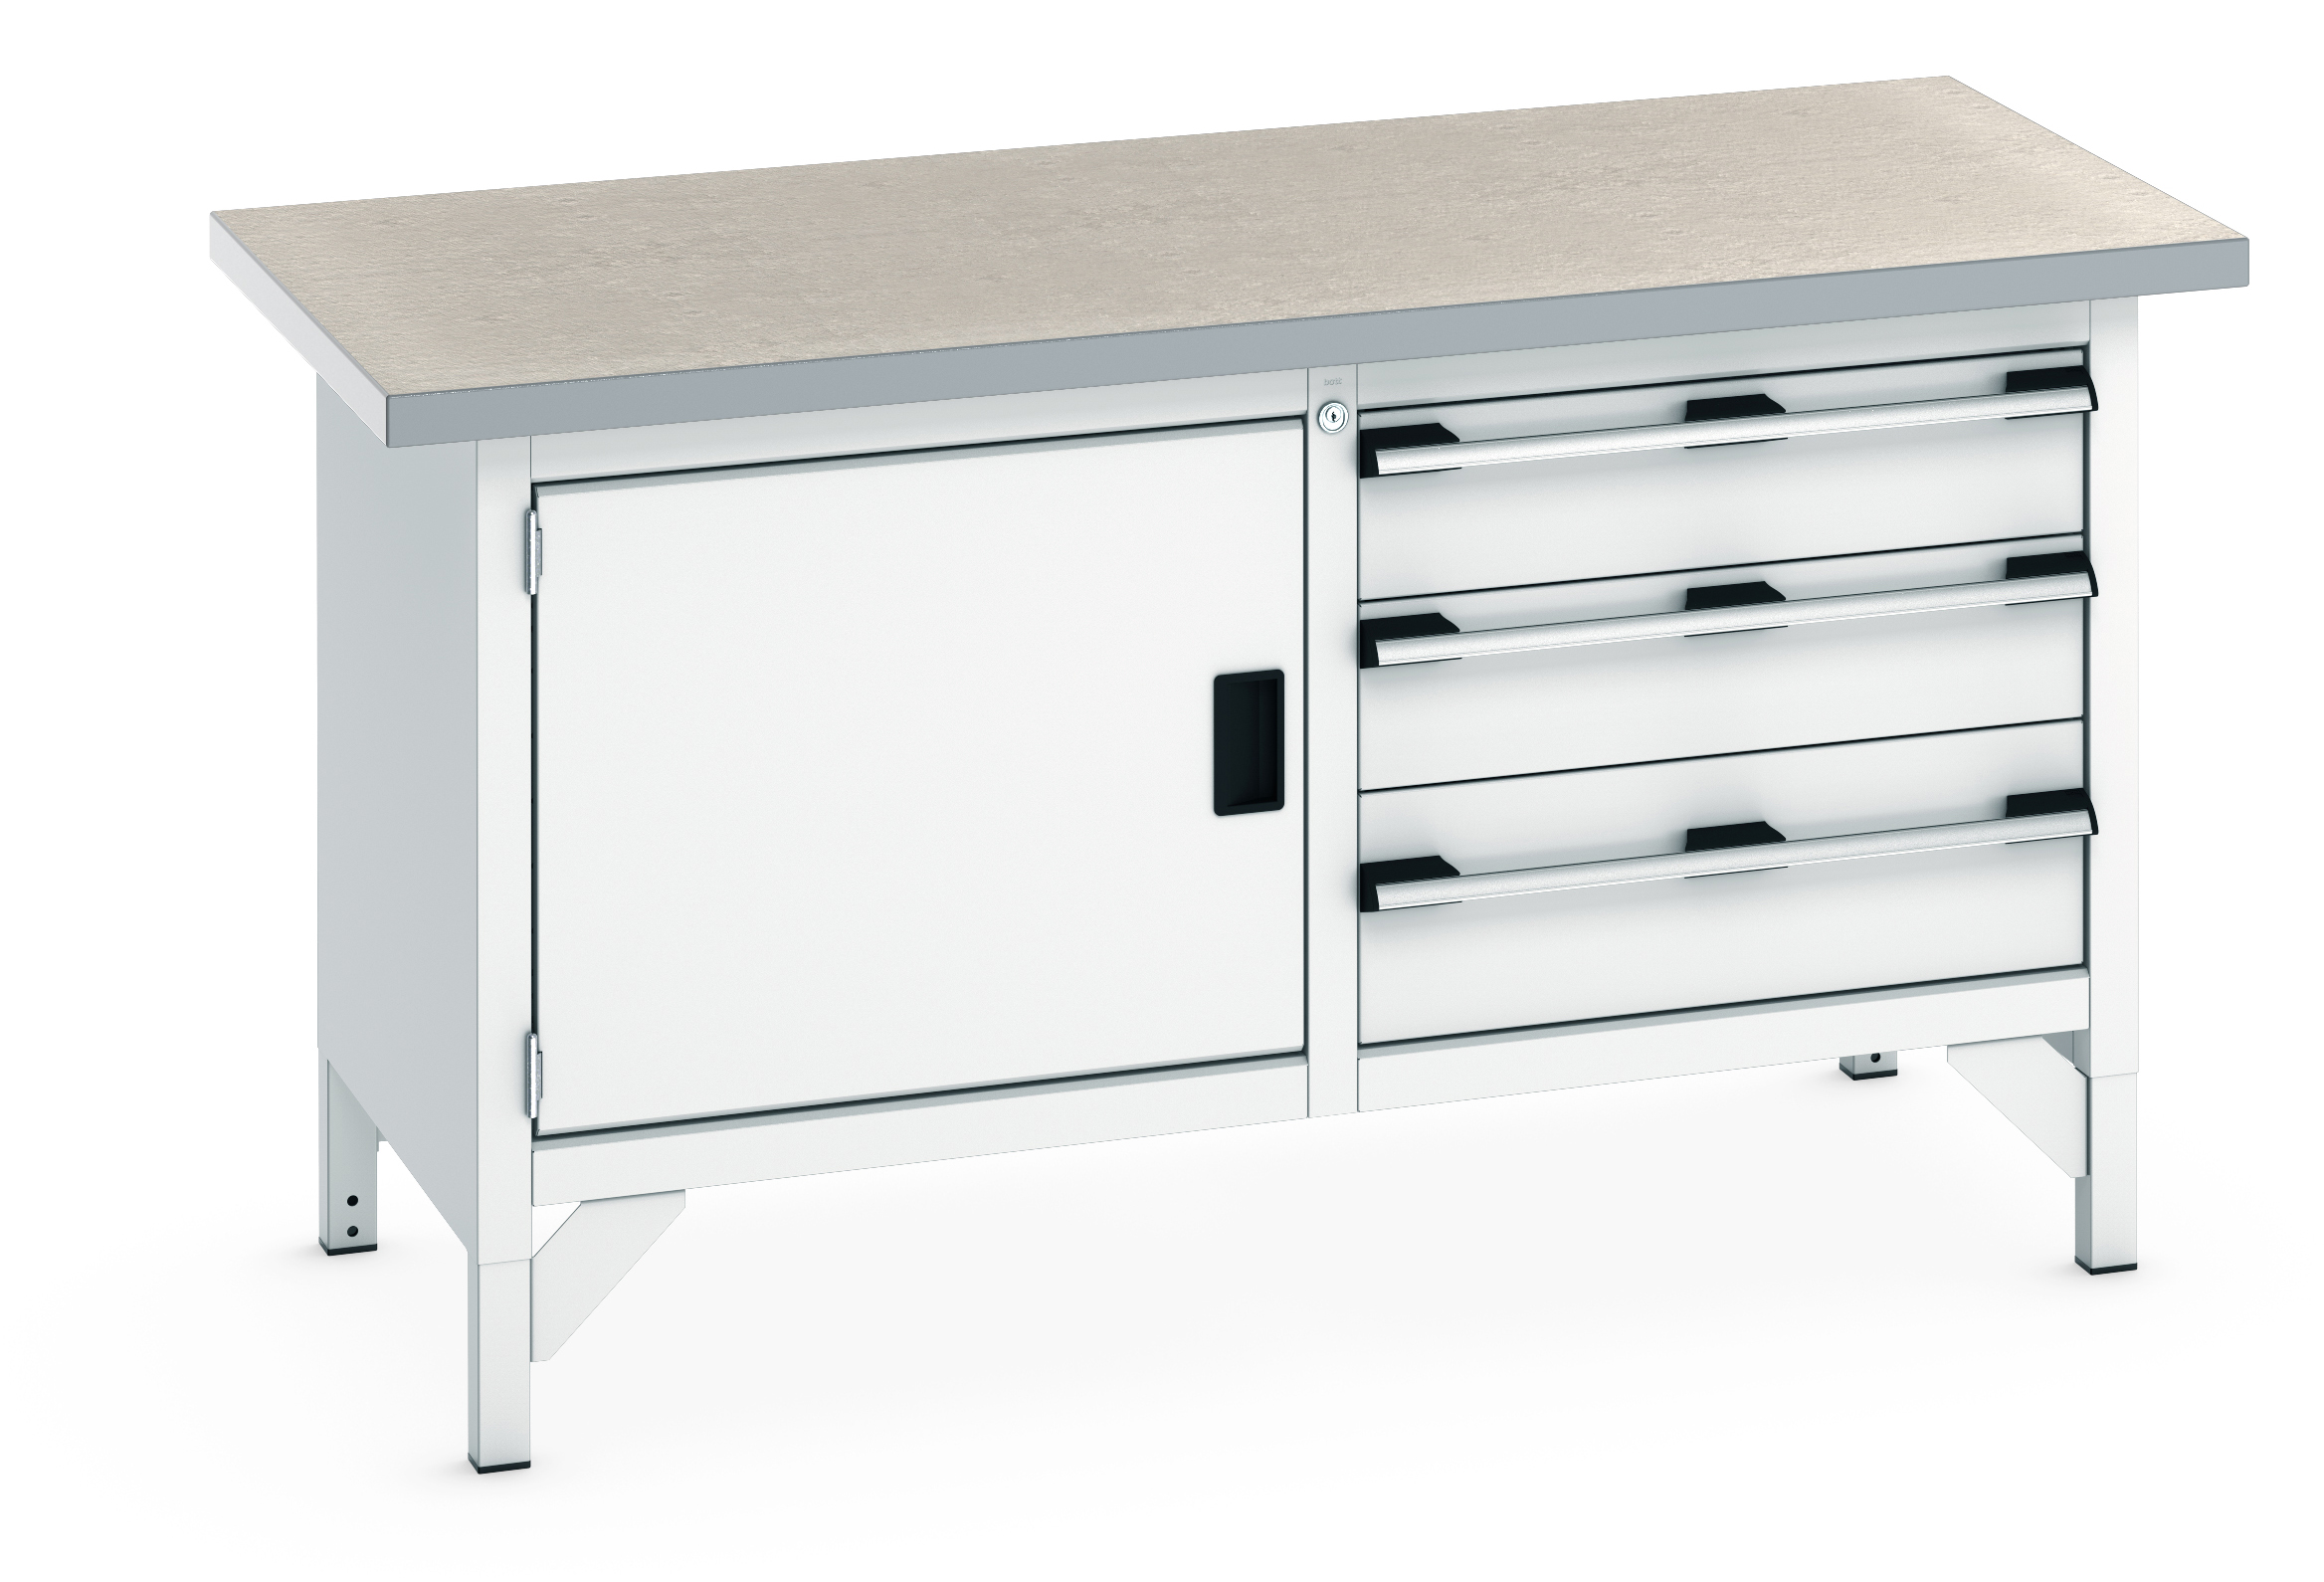 Bott Cubio Storage Bench With Full Cupboard / 3 Drawer Cabinet - 41002027.16V